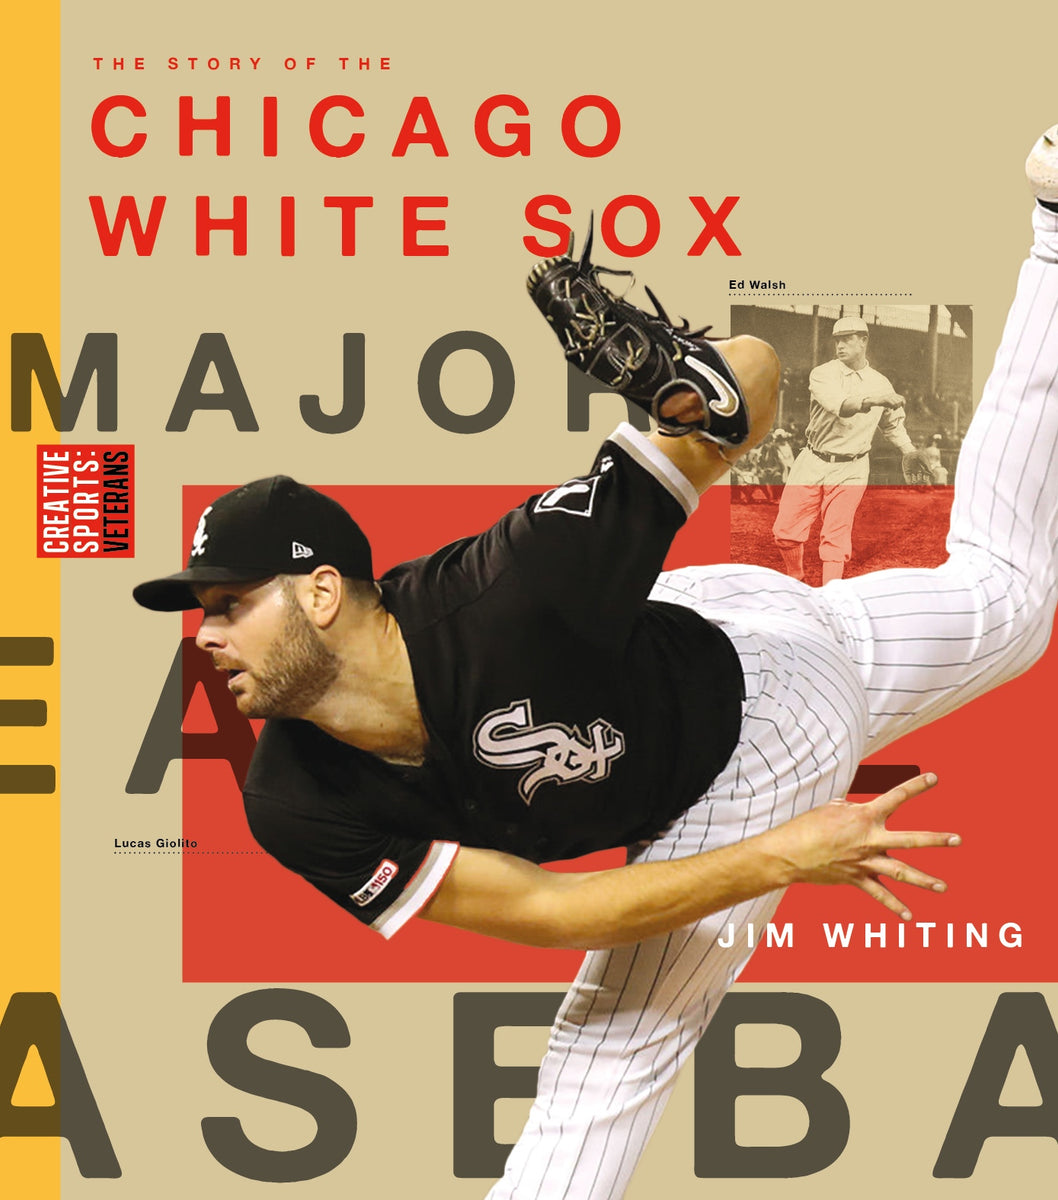 Creative Sports: Chicago White Sox – The Creative Company Shop